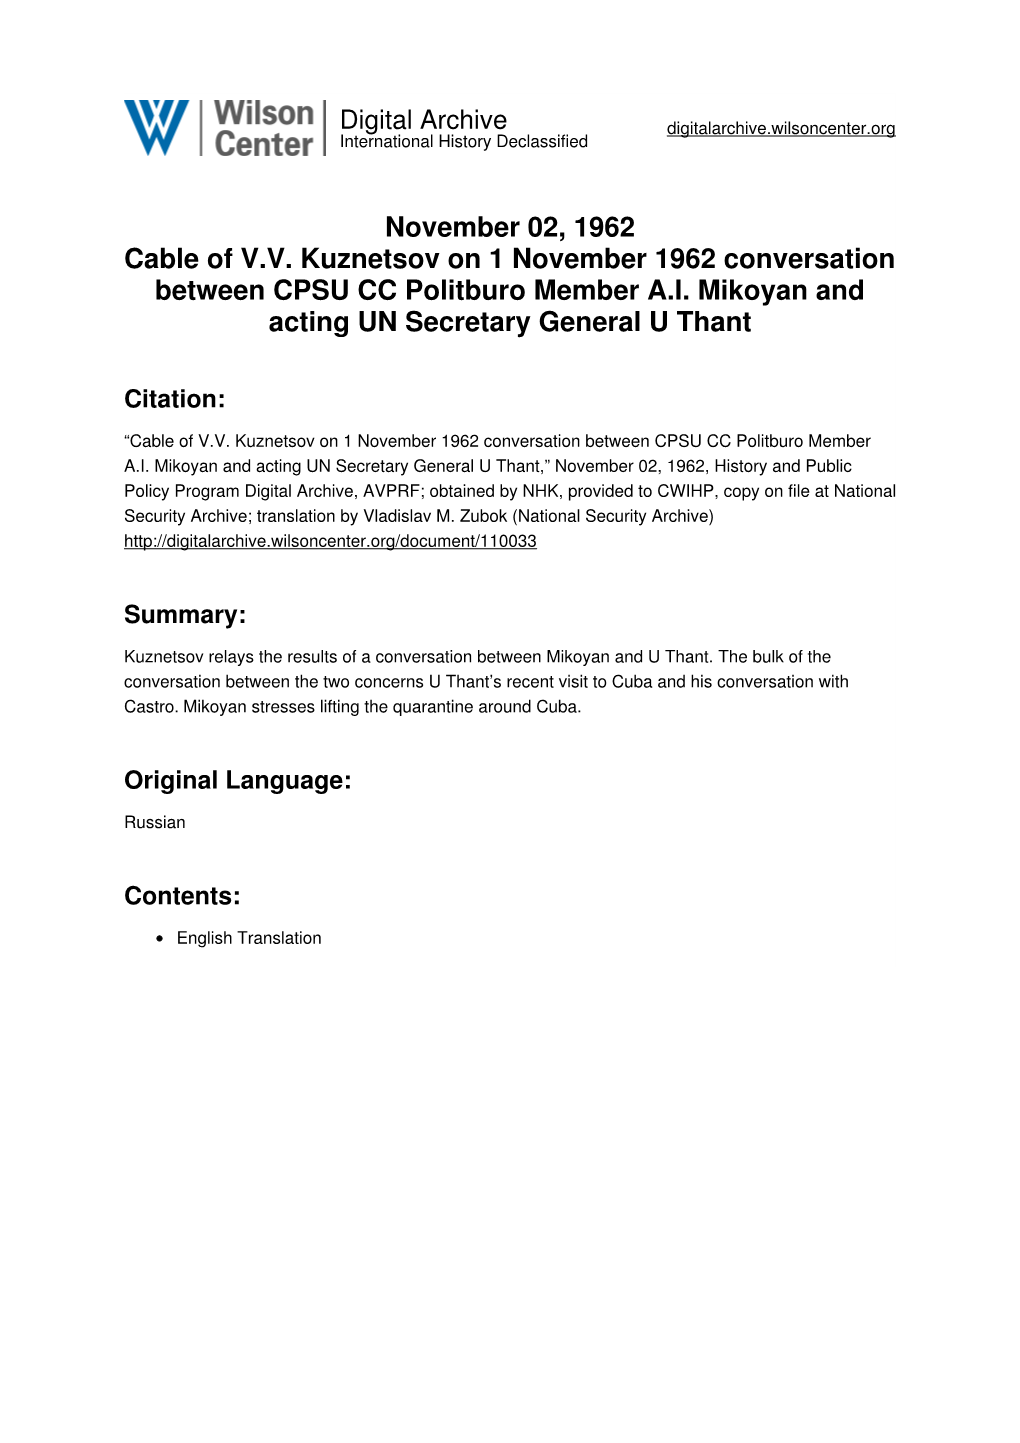 November 02, 1962 Cable of V.V. Kuznetsov on 1 November 1962 Conversation Between CPSU CC Politburo Member A.I